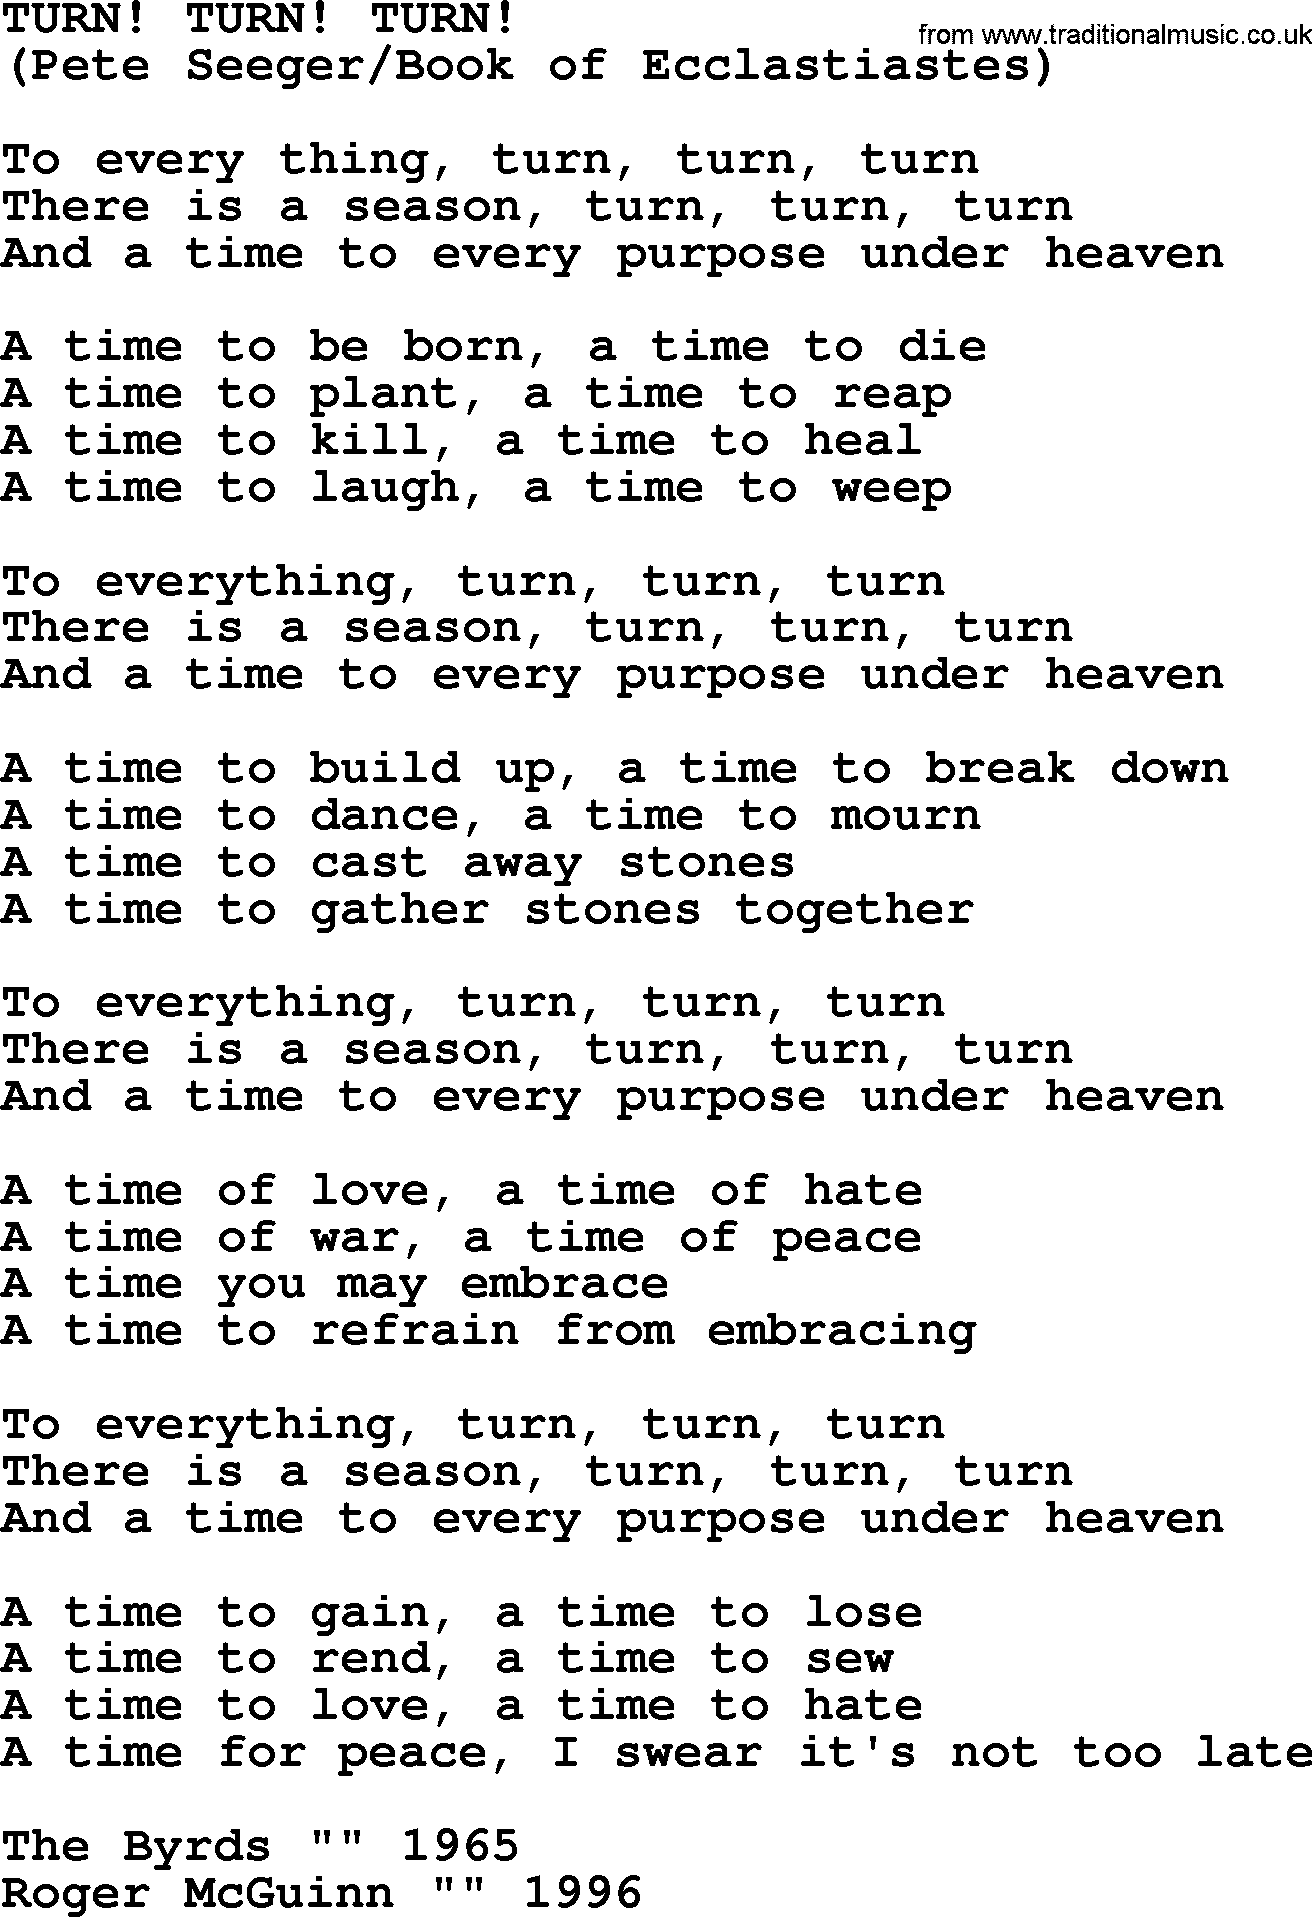 The Byrds song Turn! Turn! Turn!, lyrics